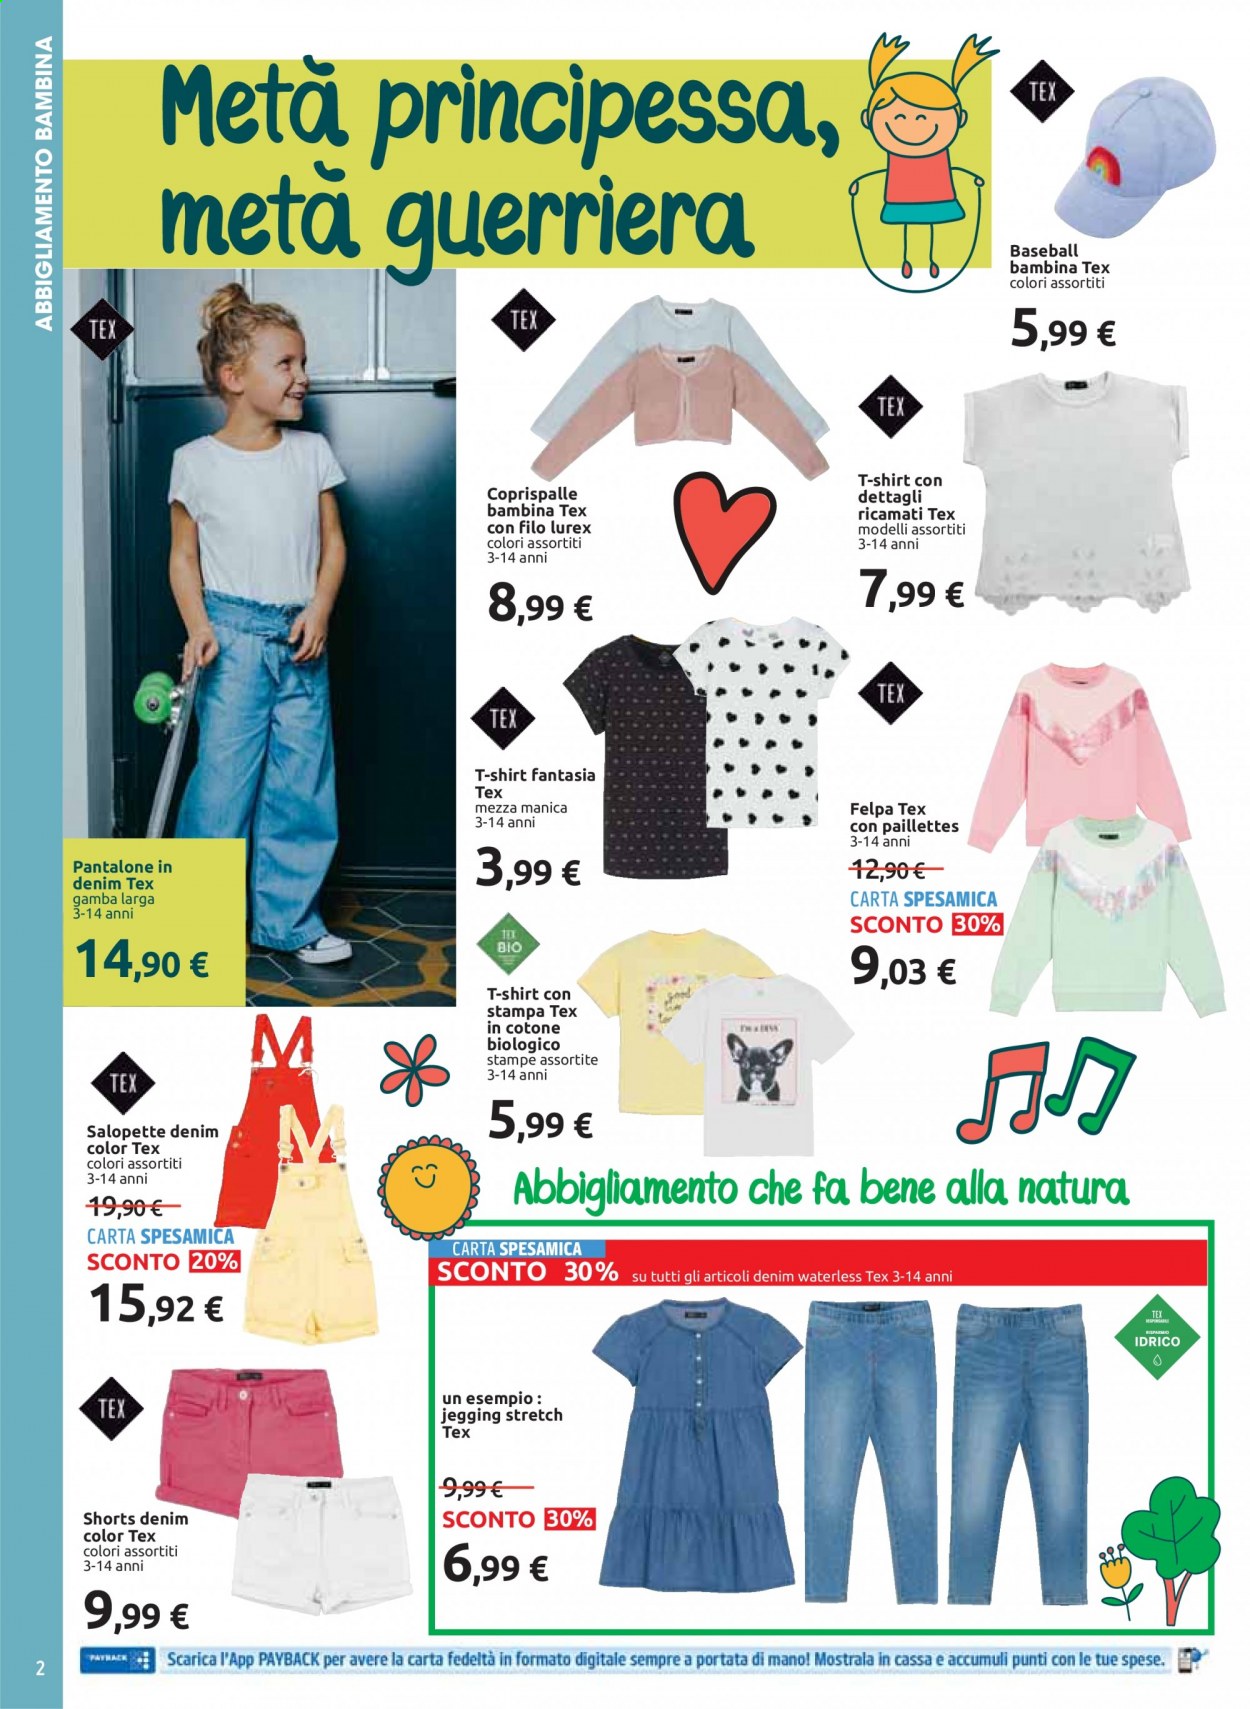 thumbnail - Volantino Carrefour - 26/3/2021 - 26/4/2021 - Prodotti in offerta - Denim, pantalone, t-shirt, felpa, salopette. Pagina 2.